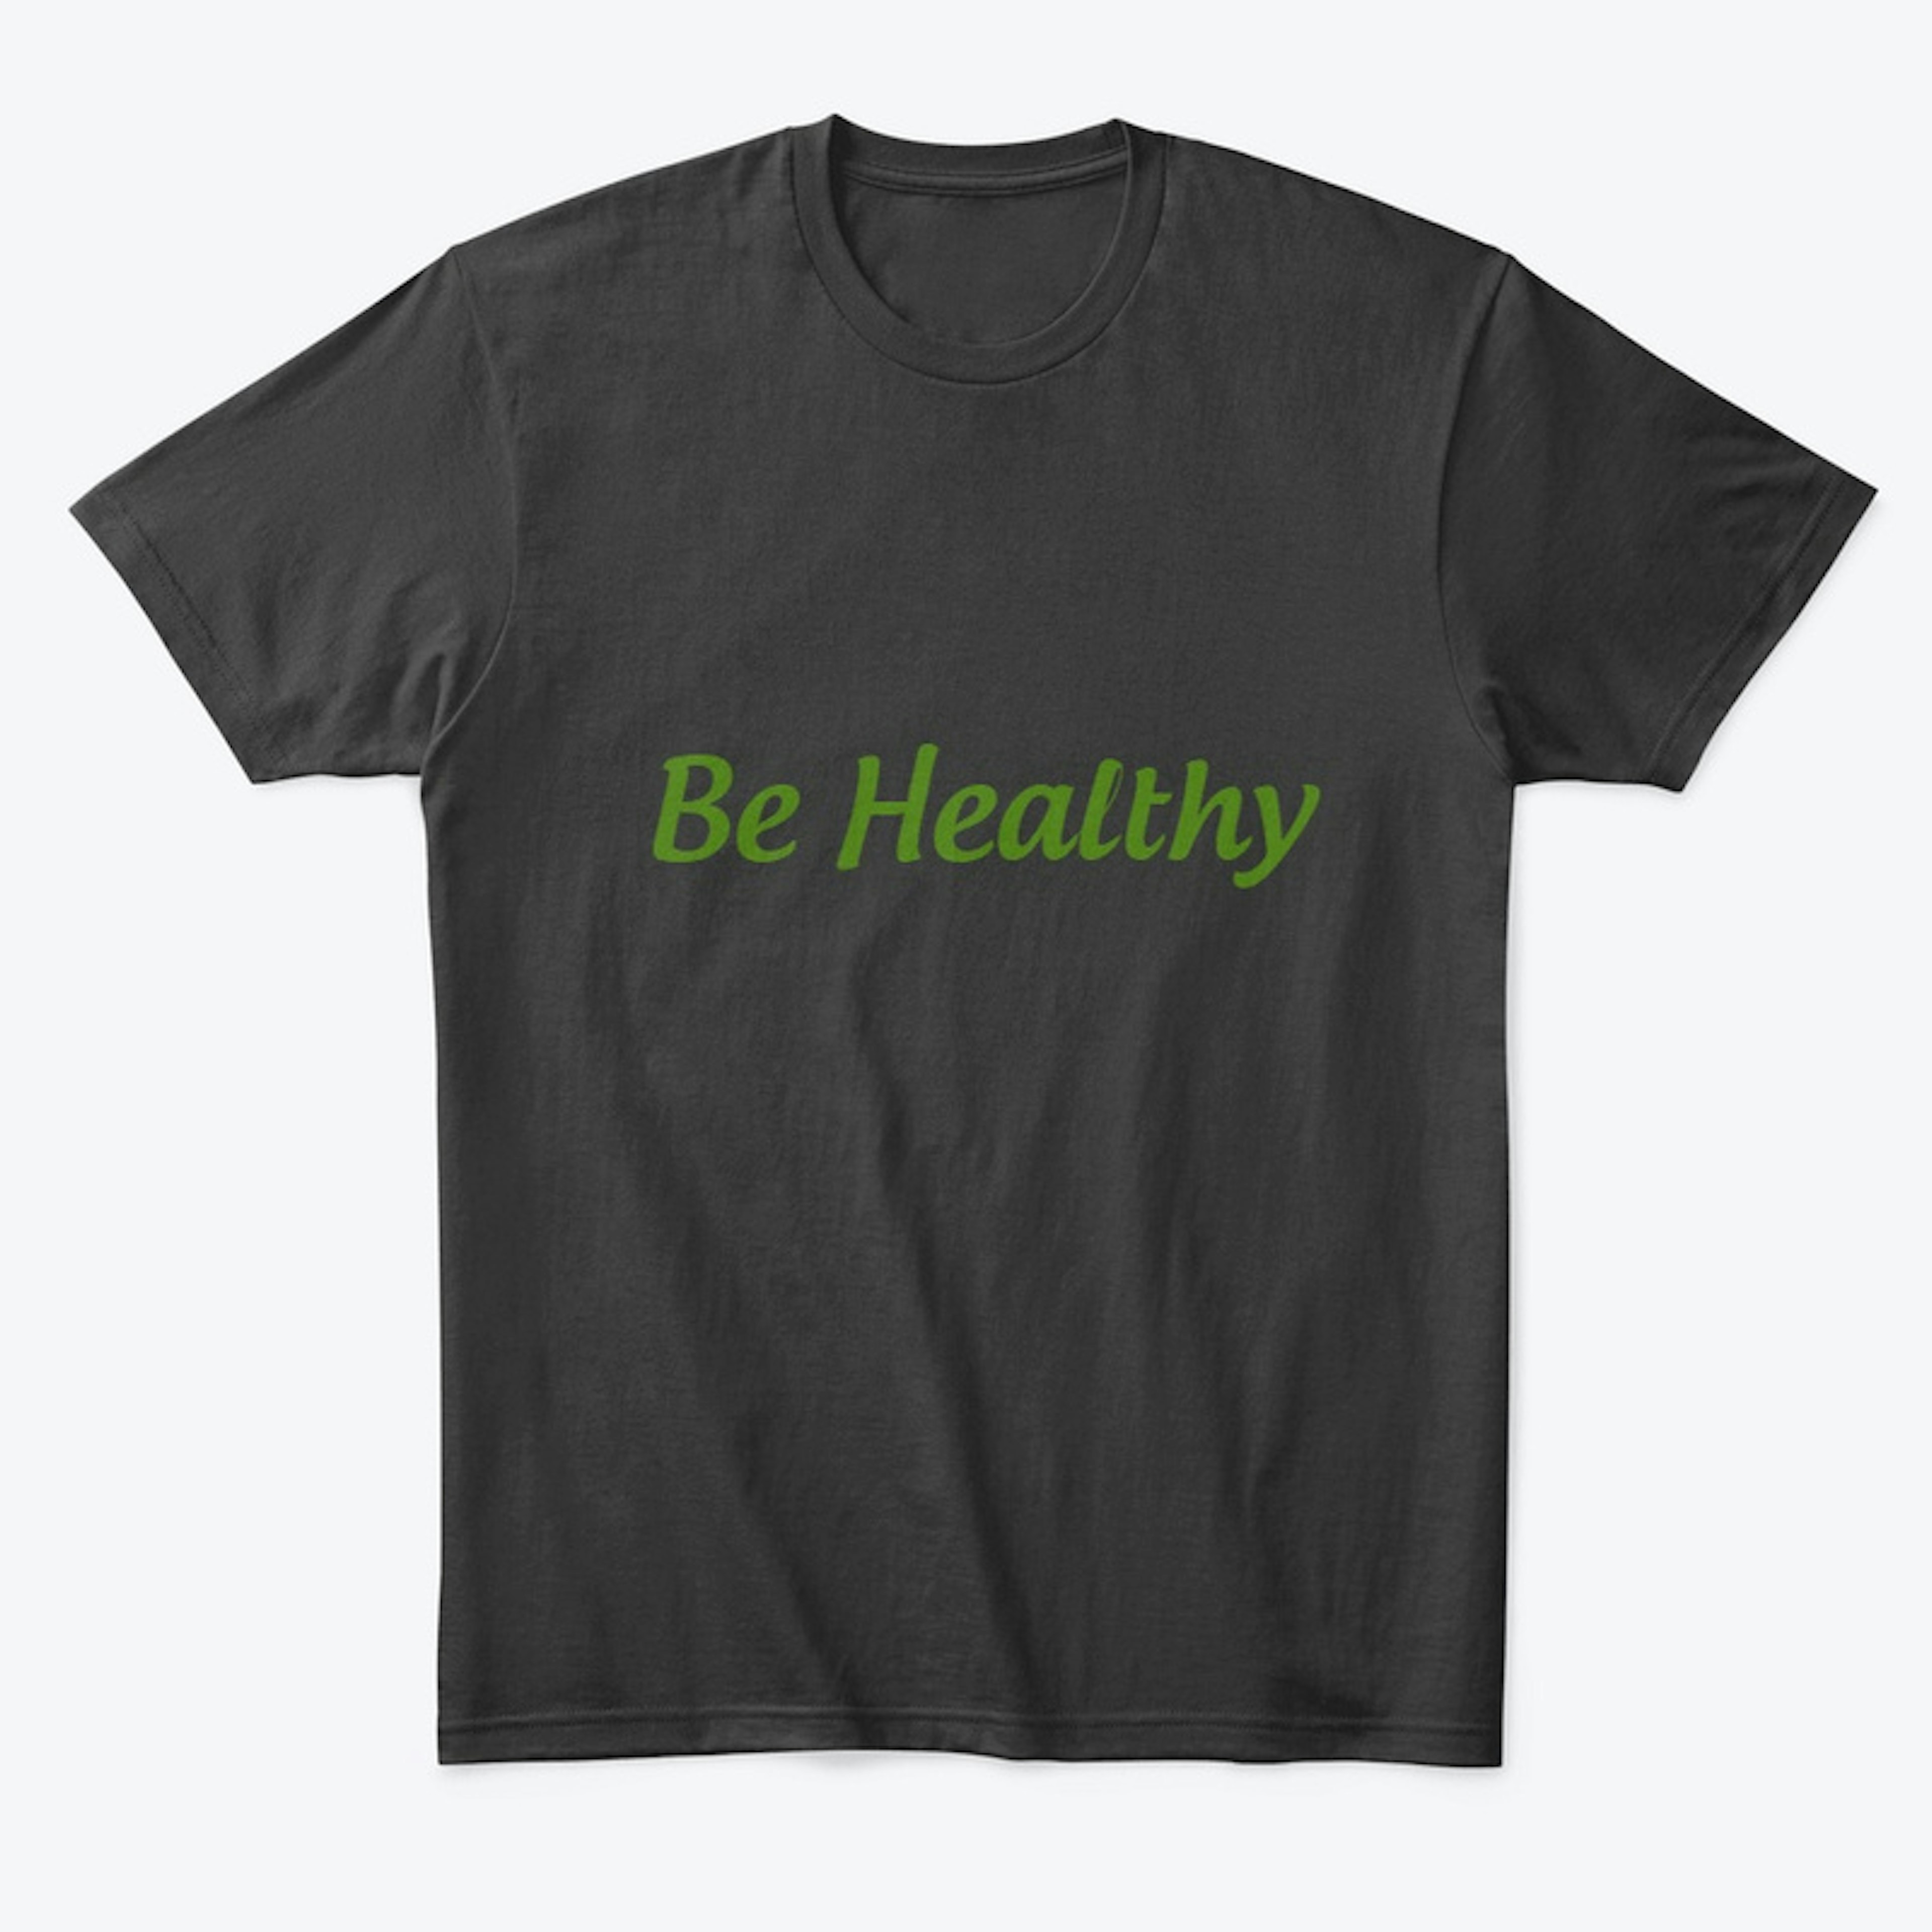 "Be Healthy" pharmaquiz